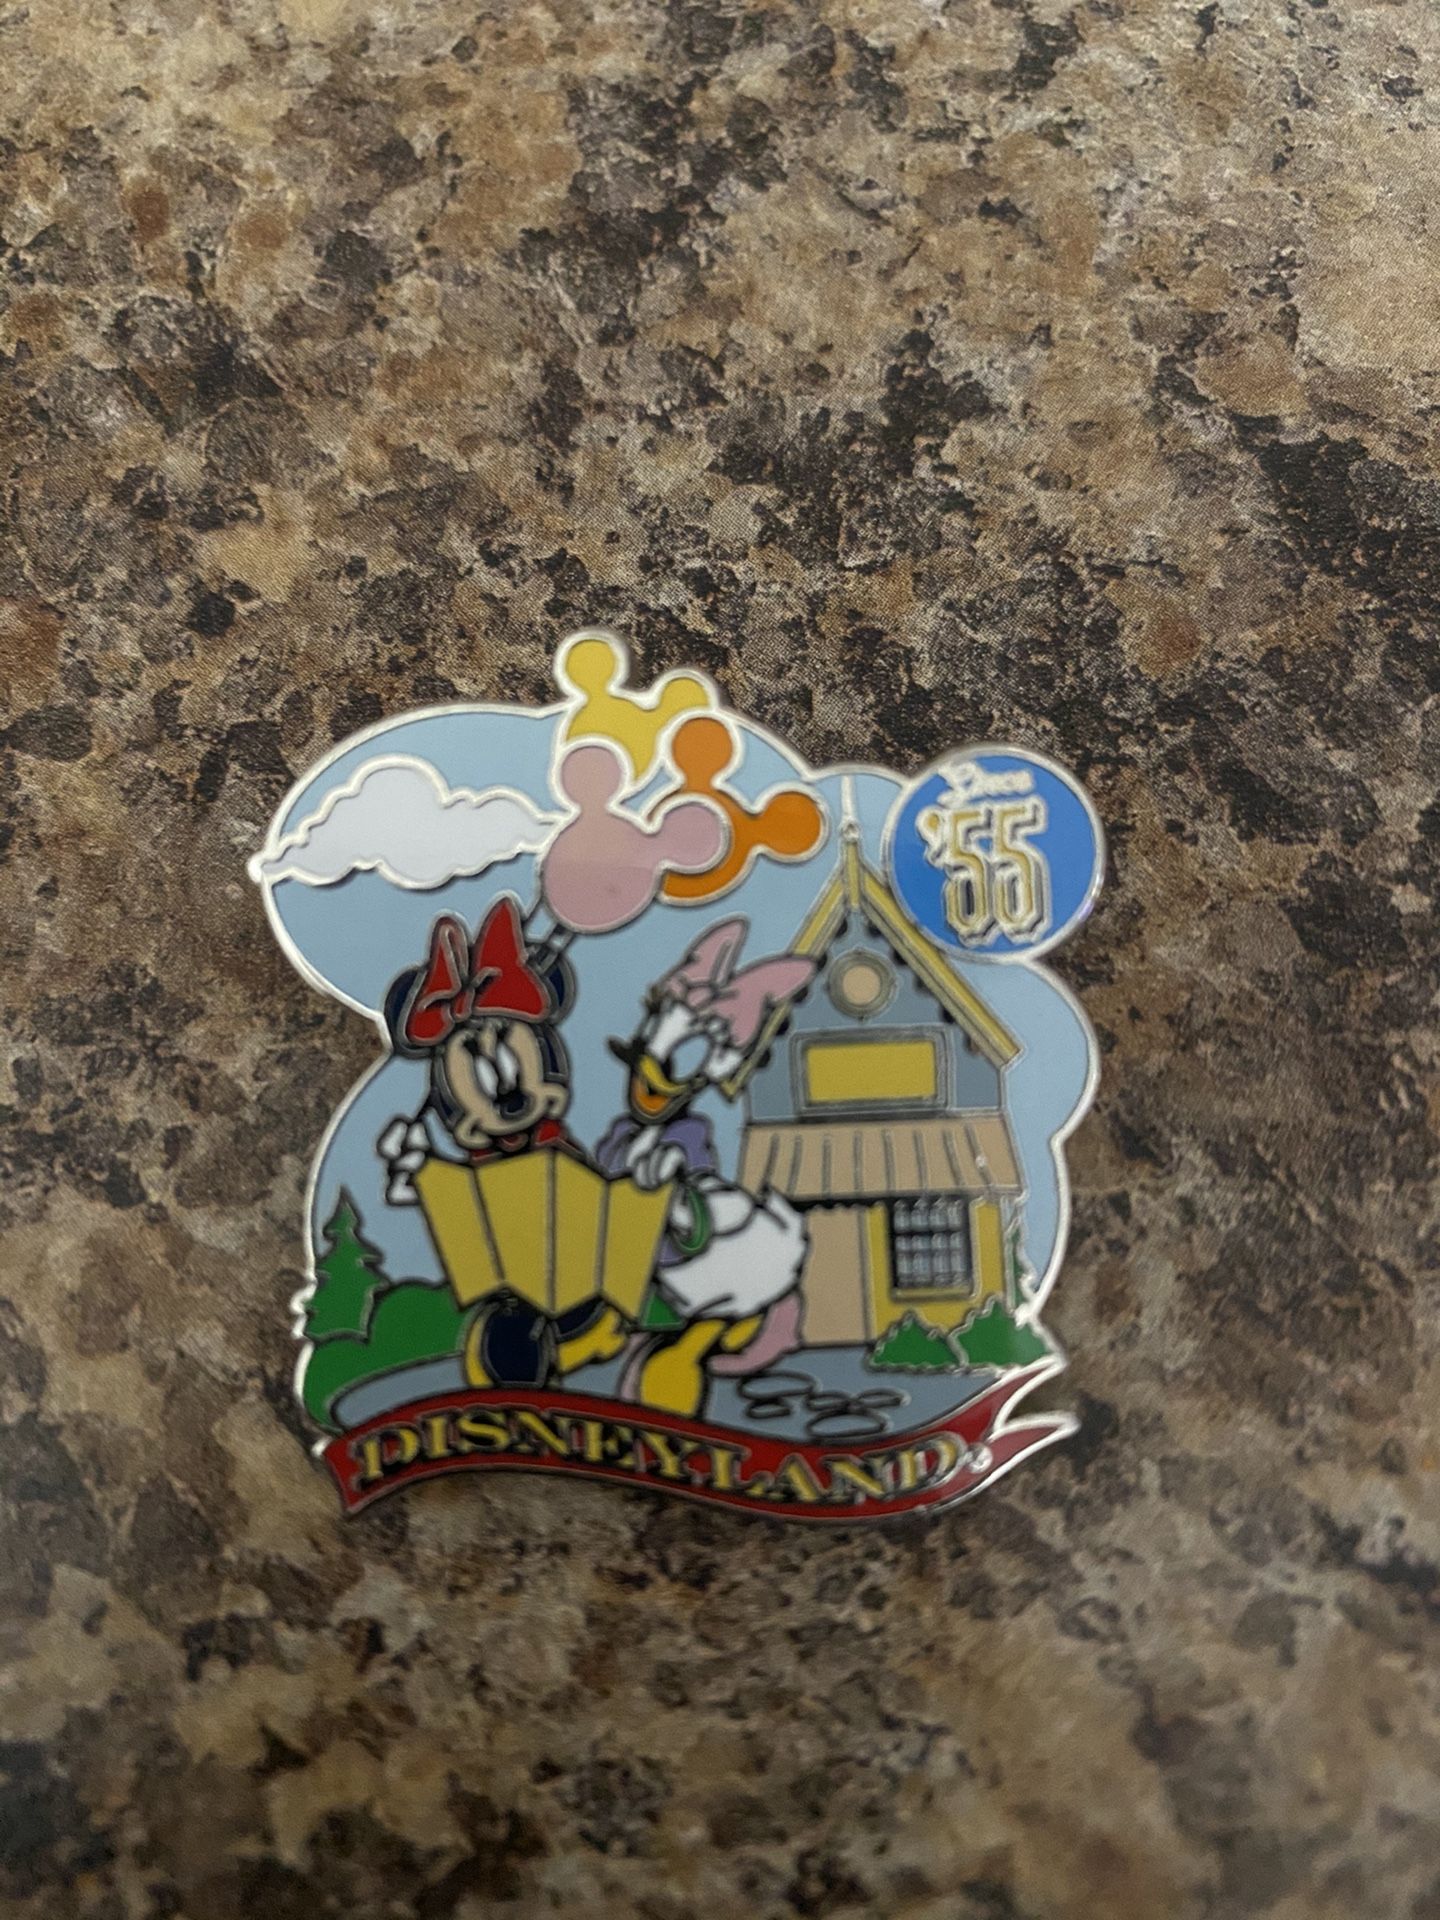 Disney trading pin